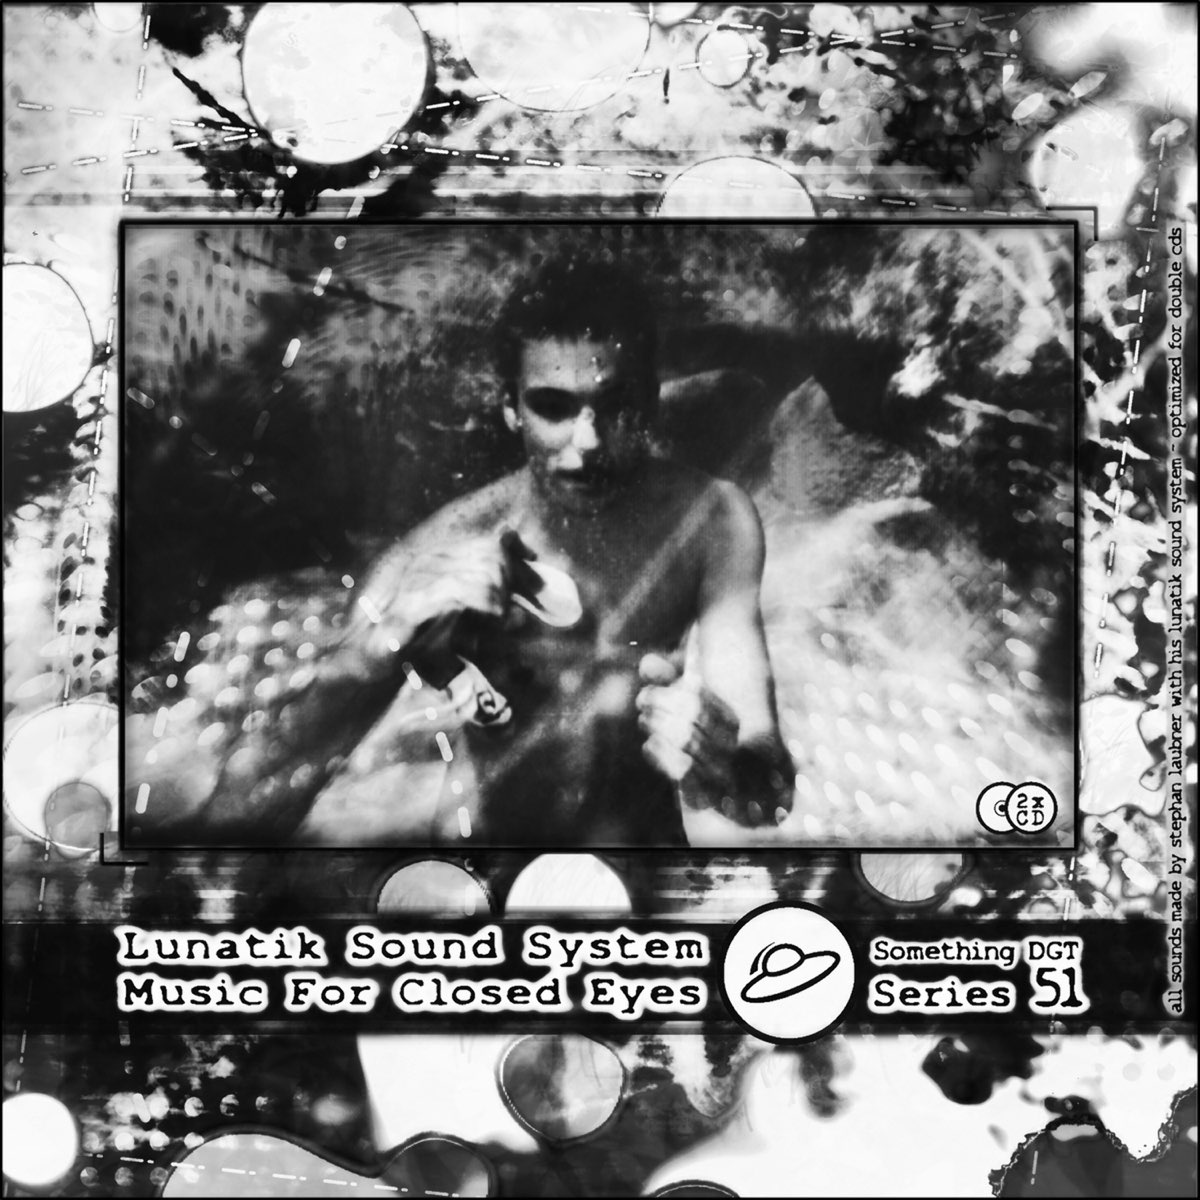 Кобяков лунатик. Primitive Sound System - Sleepwalker. Lunatic Sound time off. Primitive Sound System - Sleepwalker - a Post grunge experience.